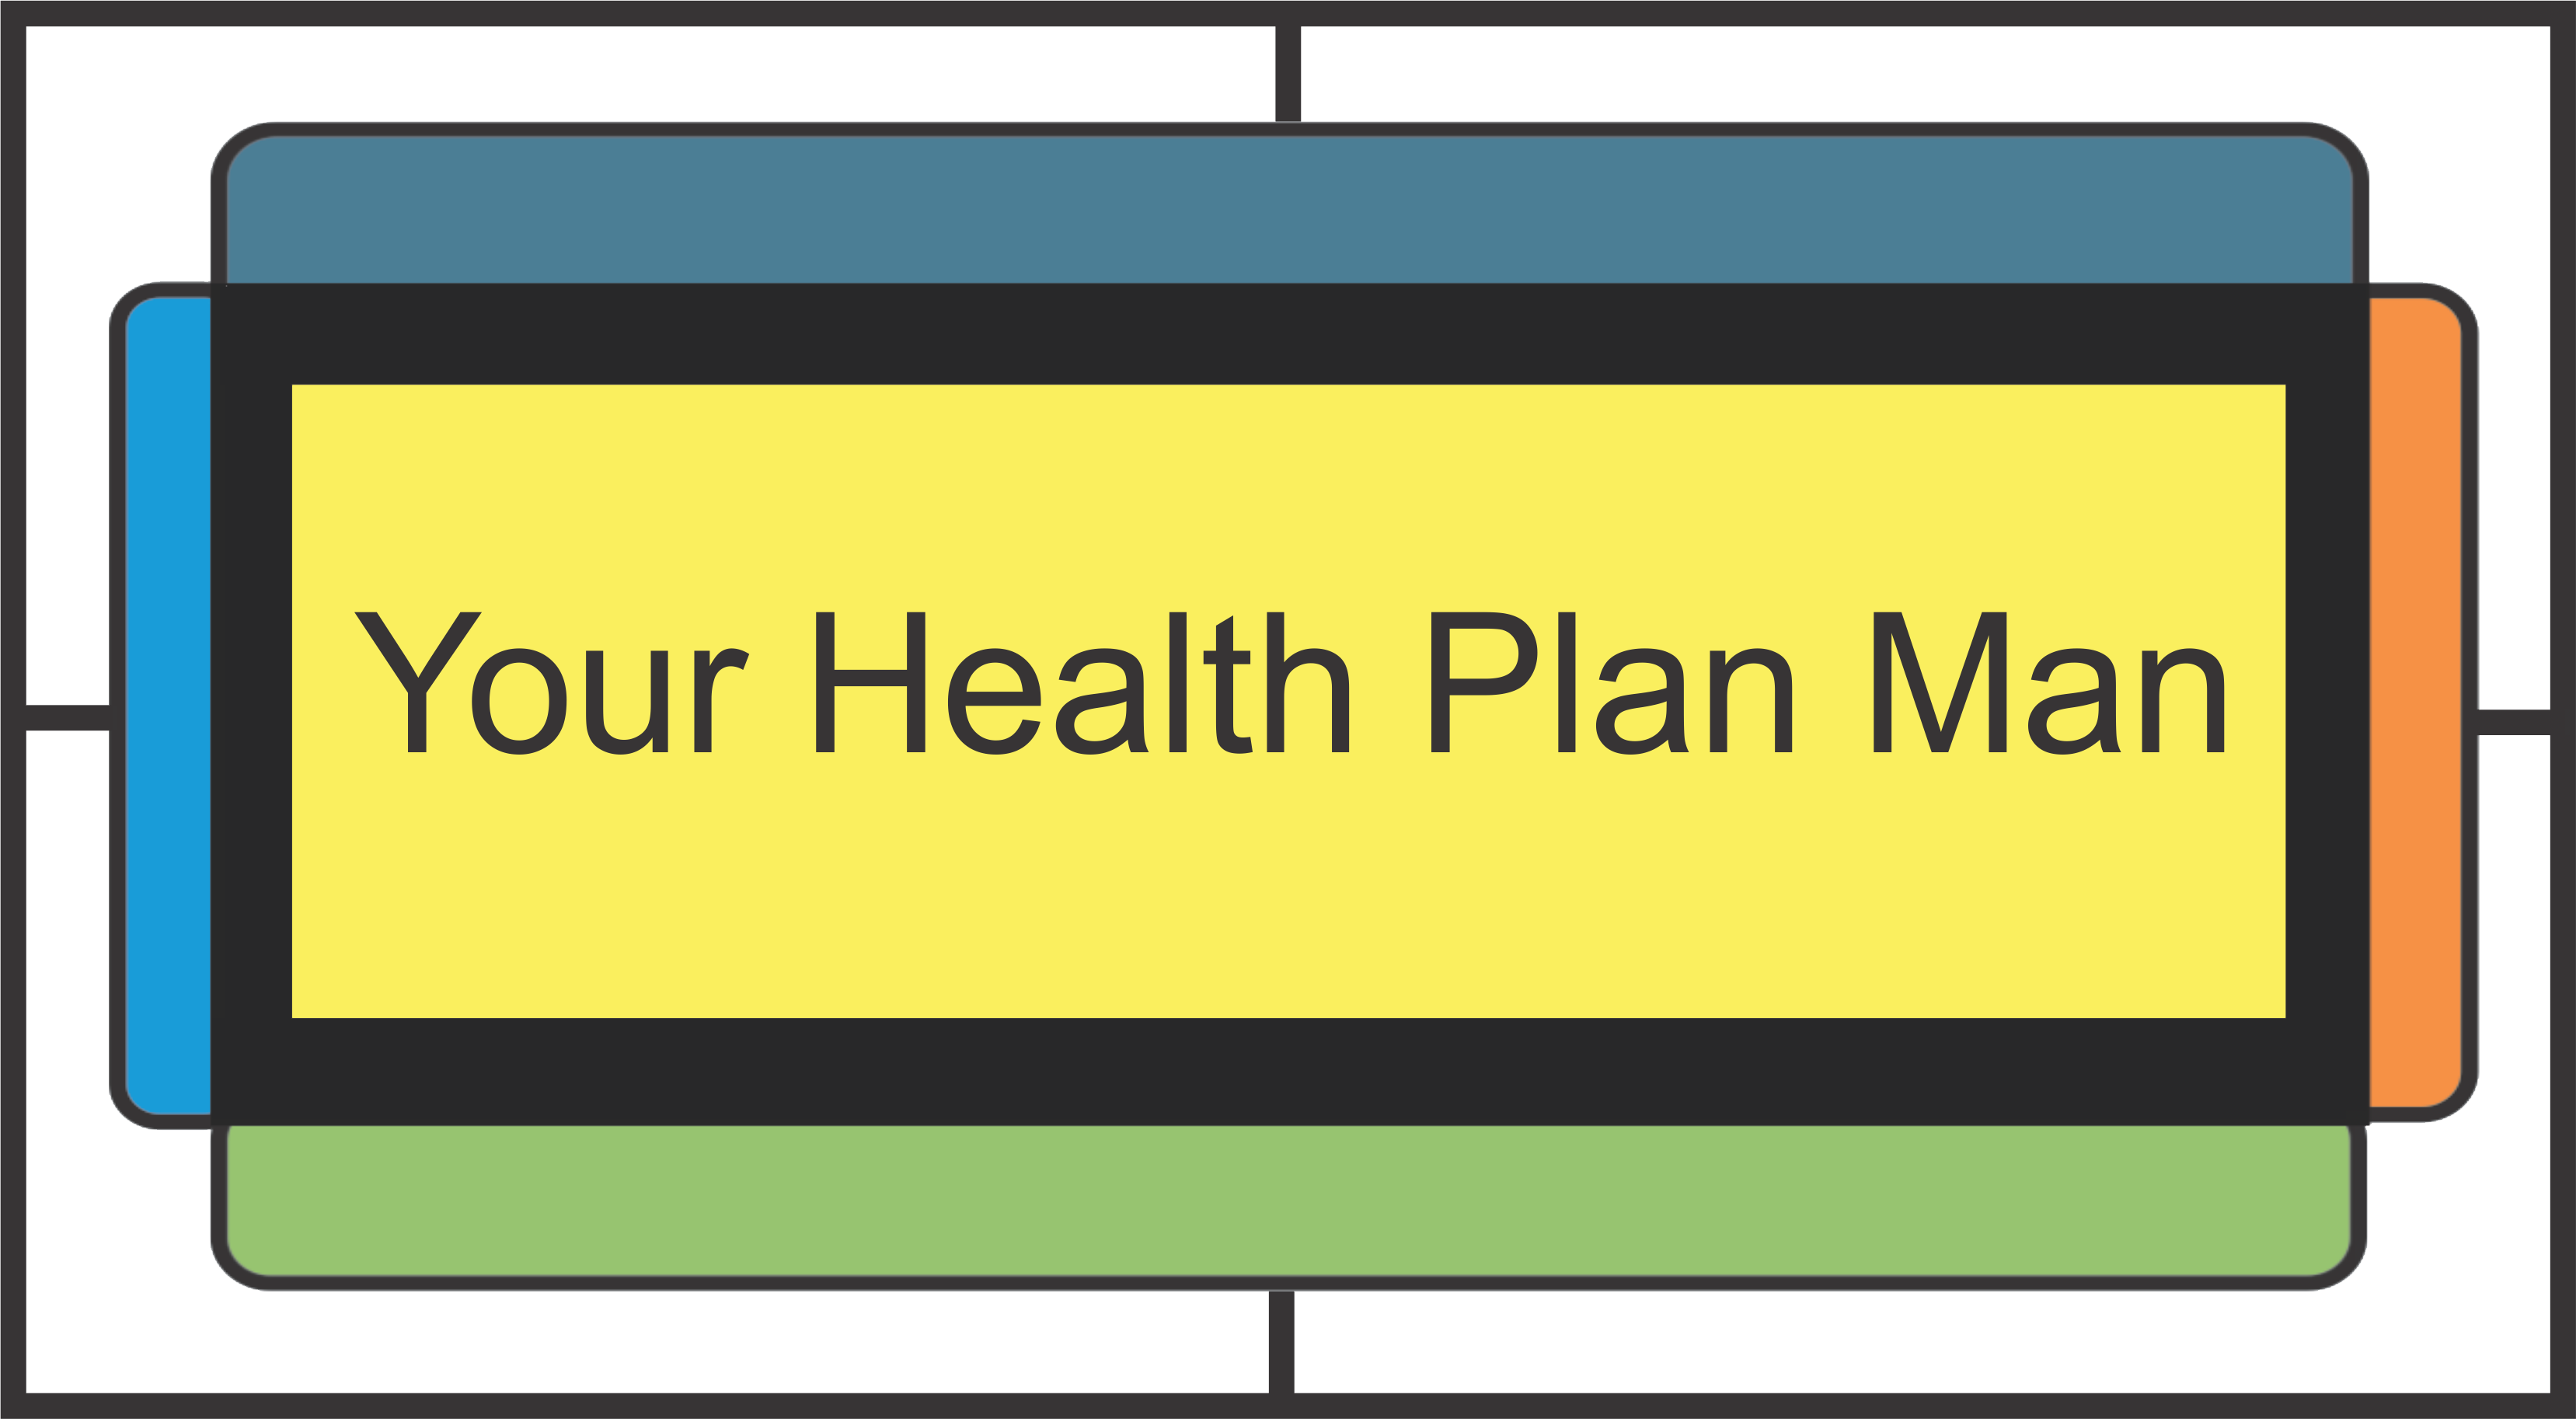 Your Health Plan Man